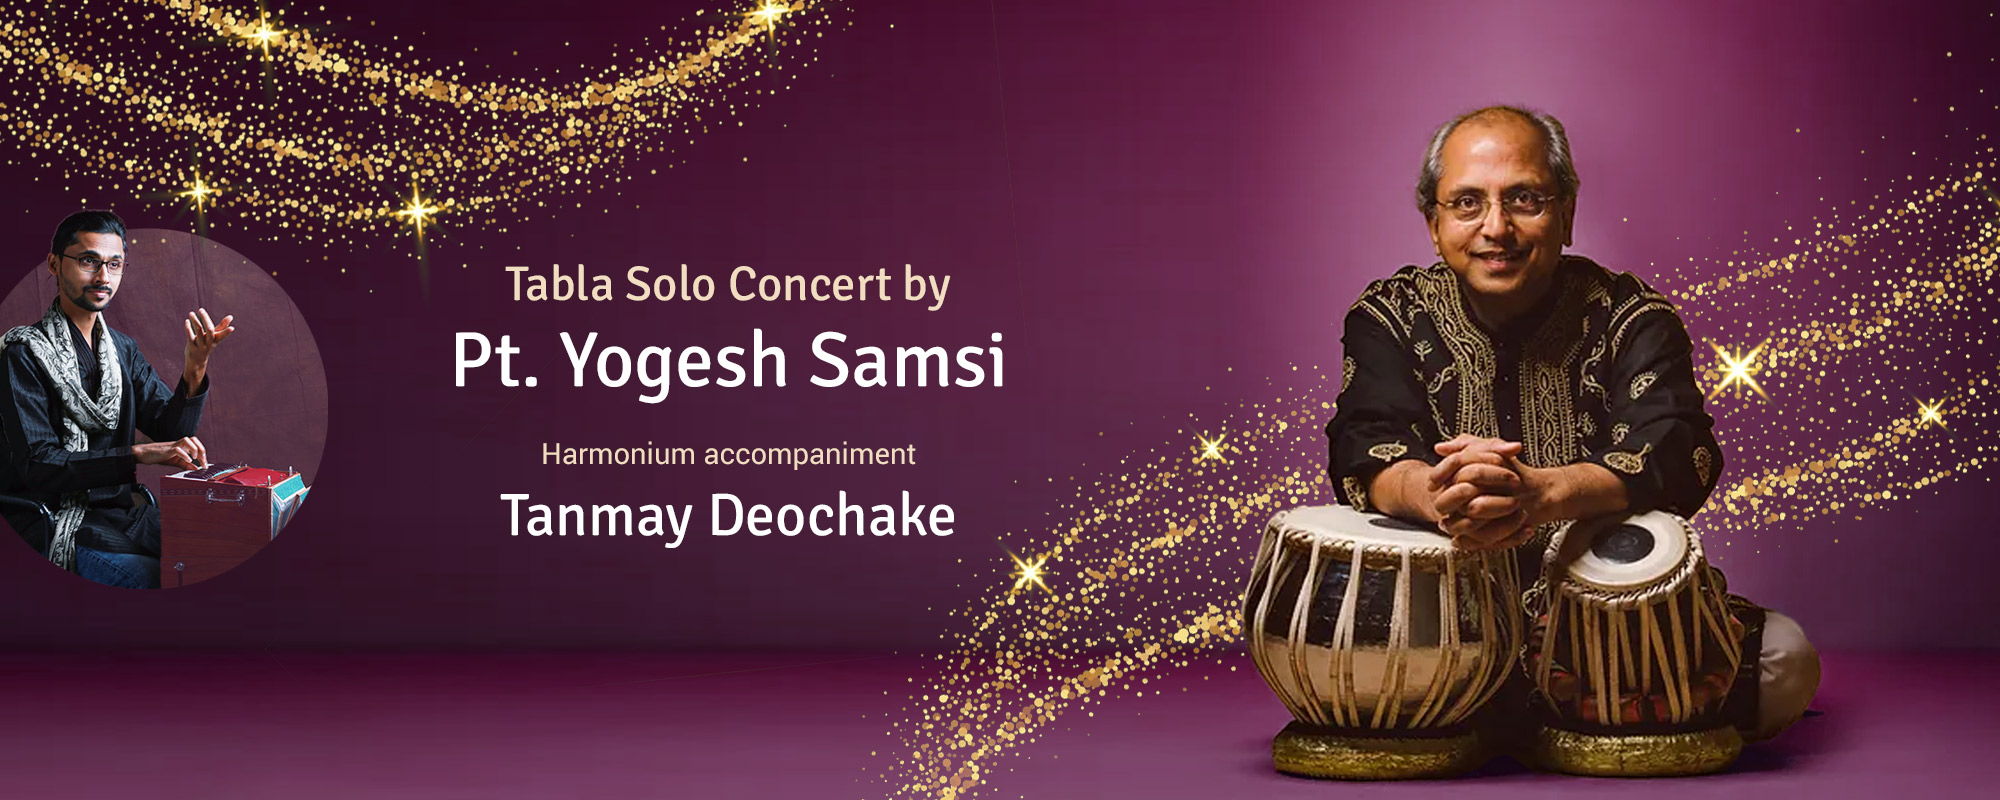 Solo concert yogesh samsi